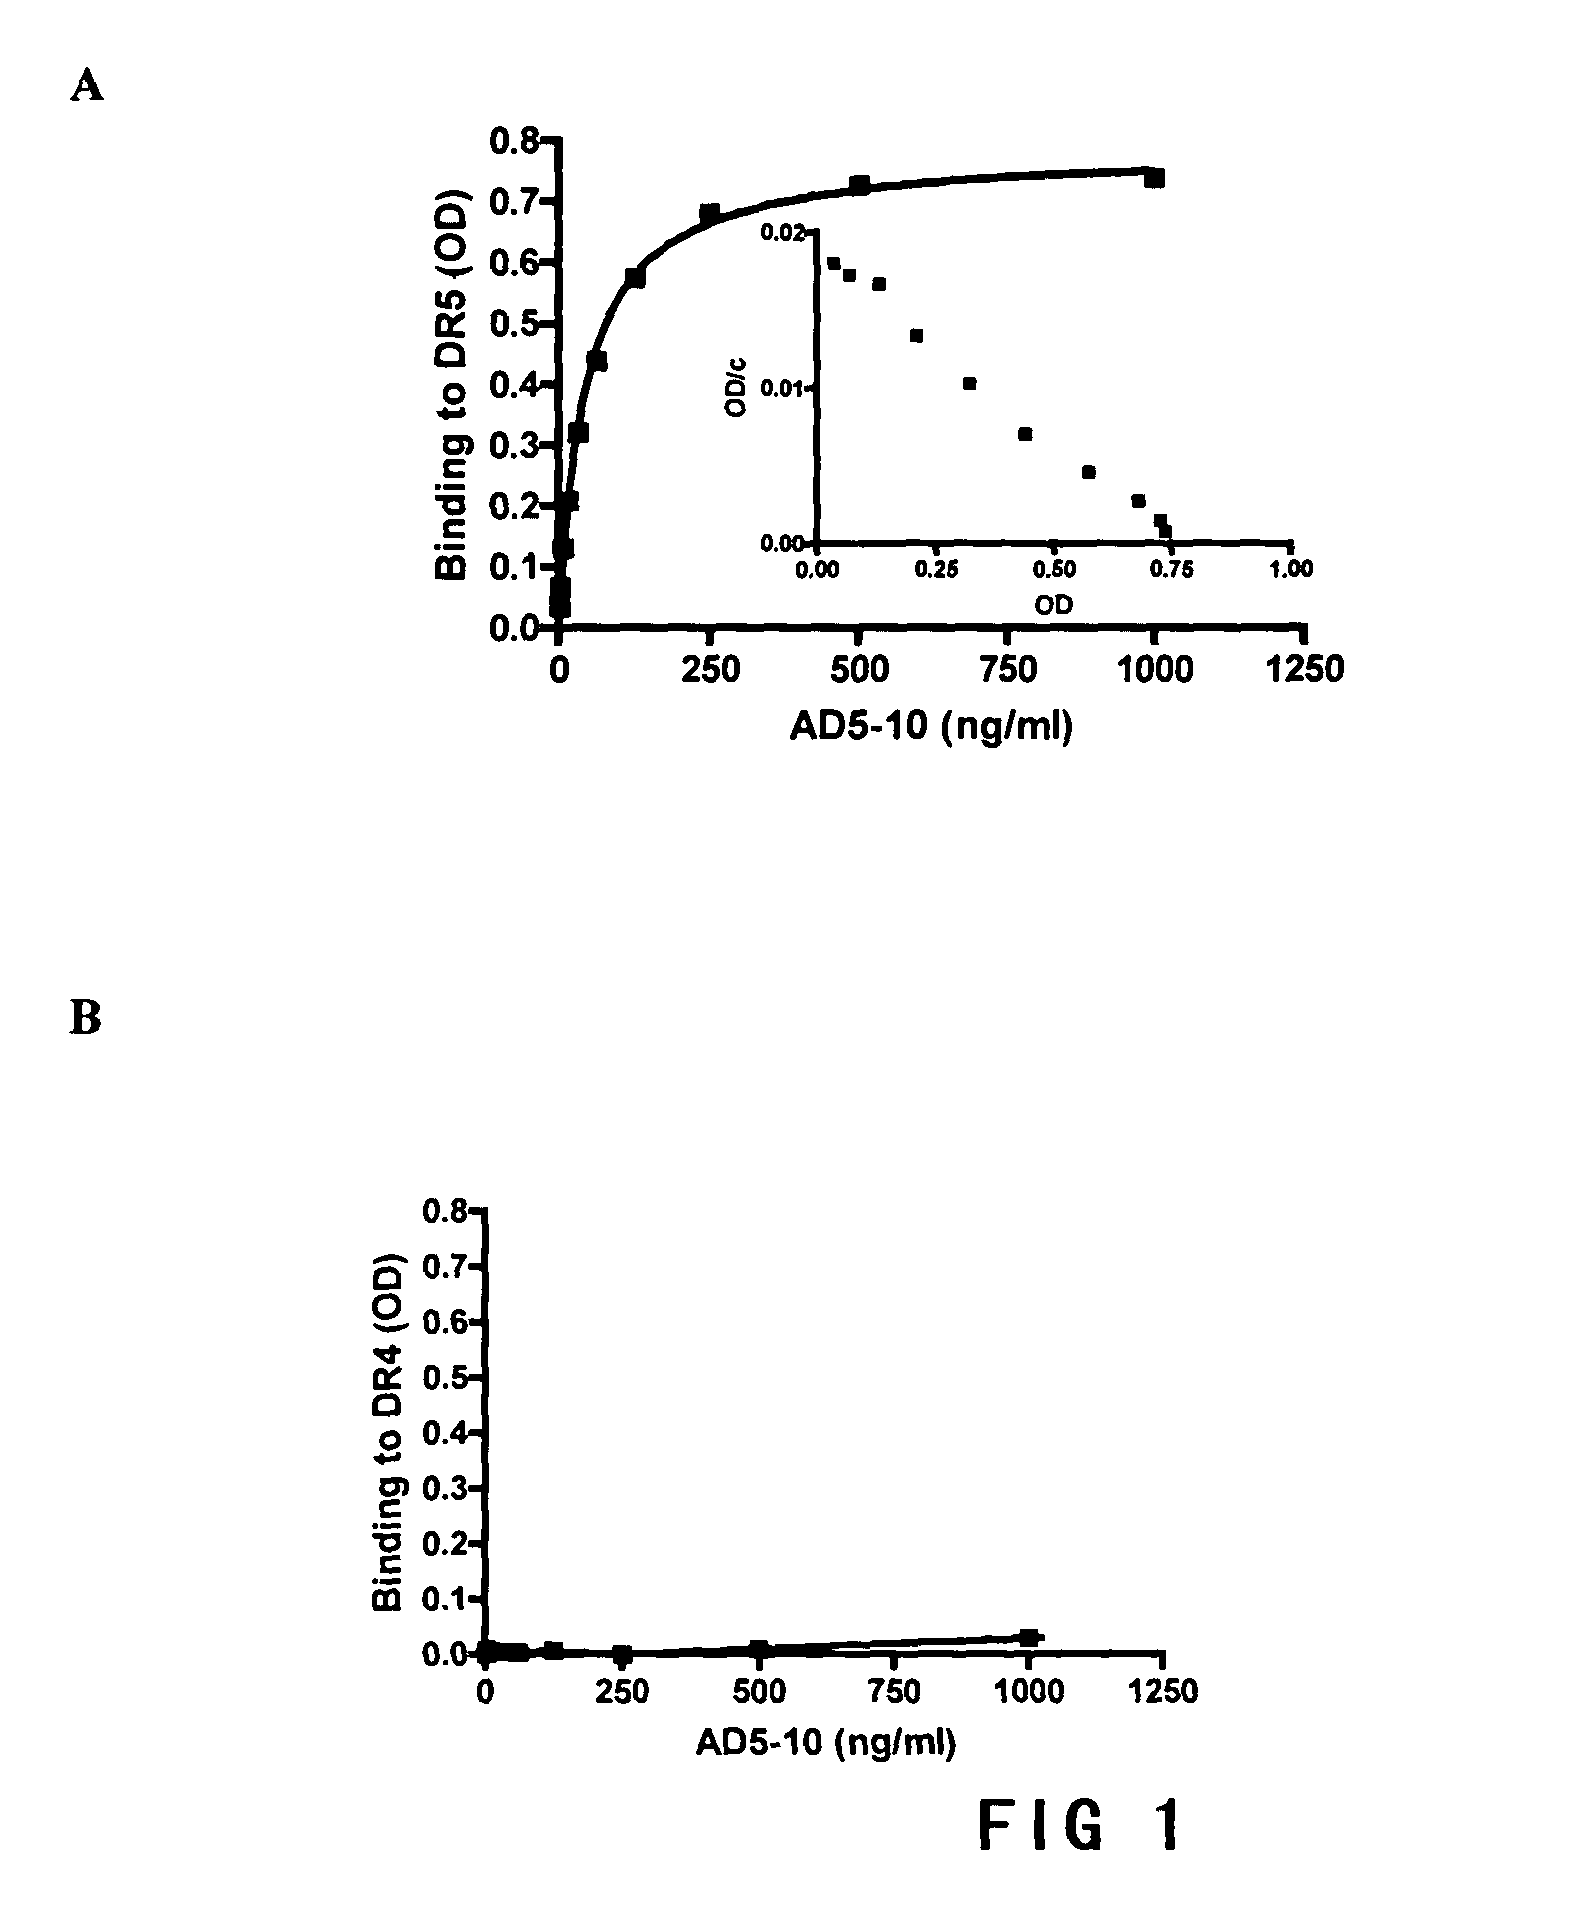 Anti-human trail receptor DR5 monoclonal antibody (AD5-10), method thereof and use of the same